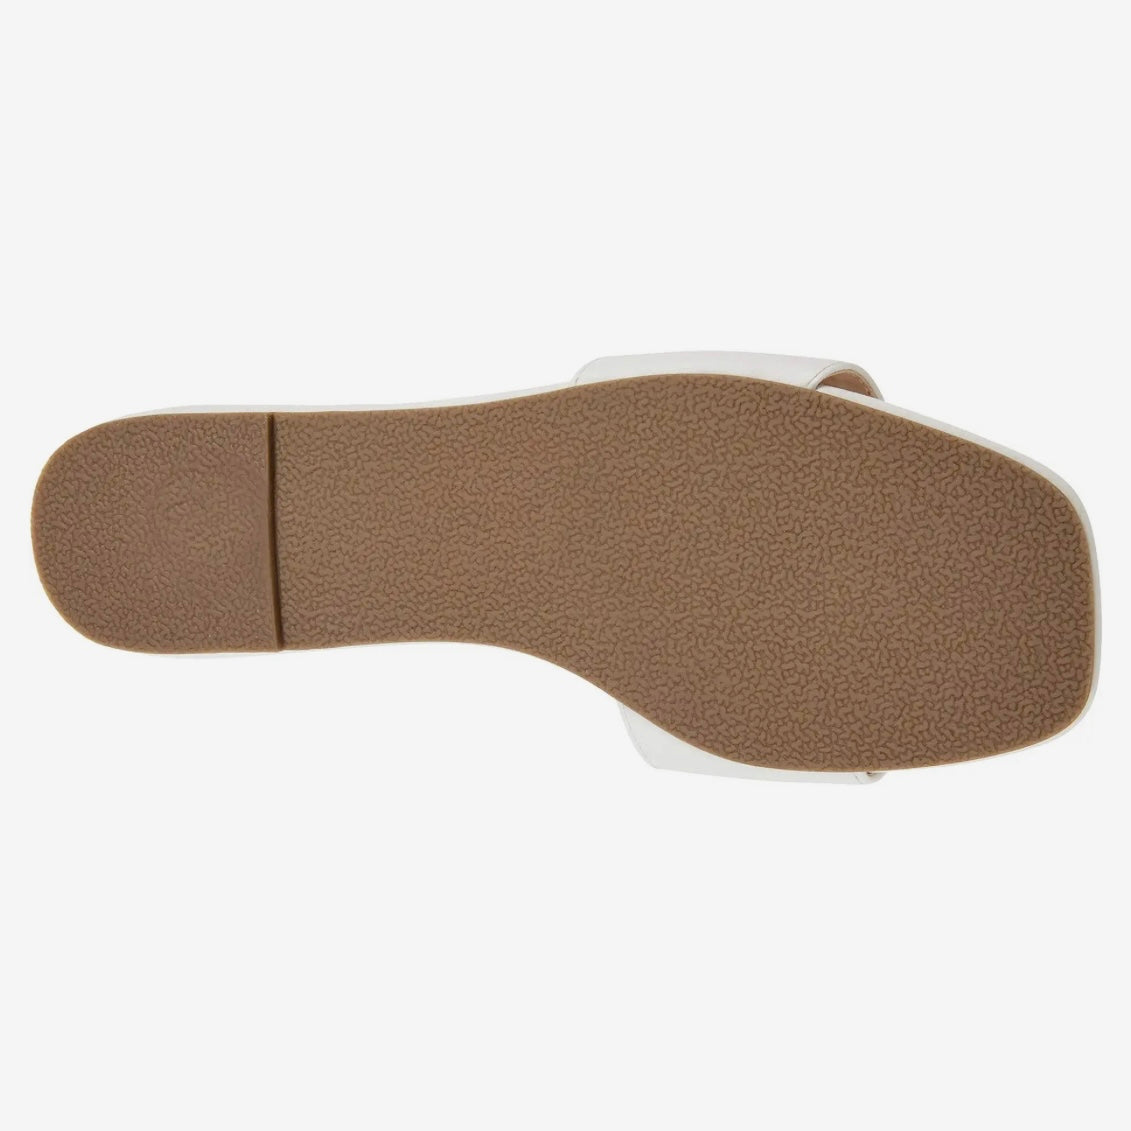 LEONIE White Slide Square Open Toe Size 6 Women's Flats Sandals